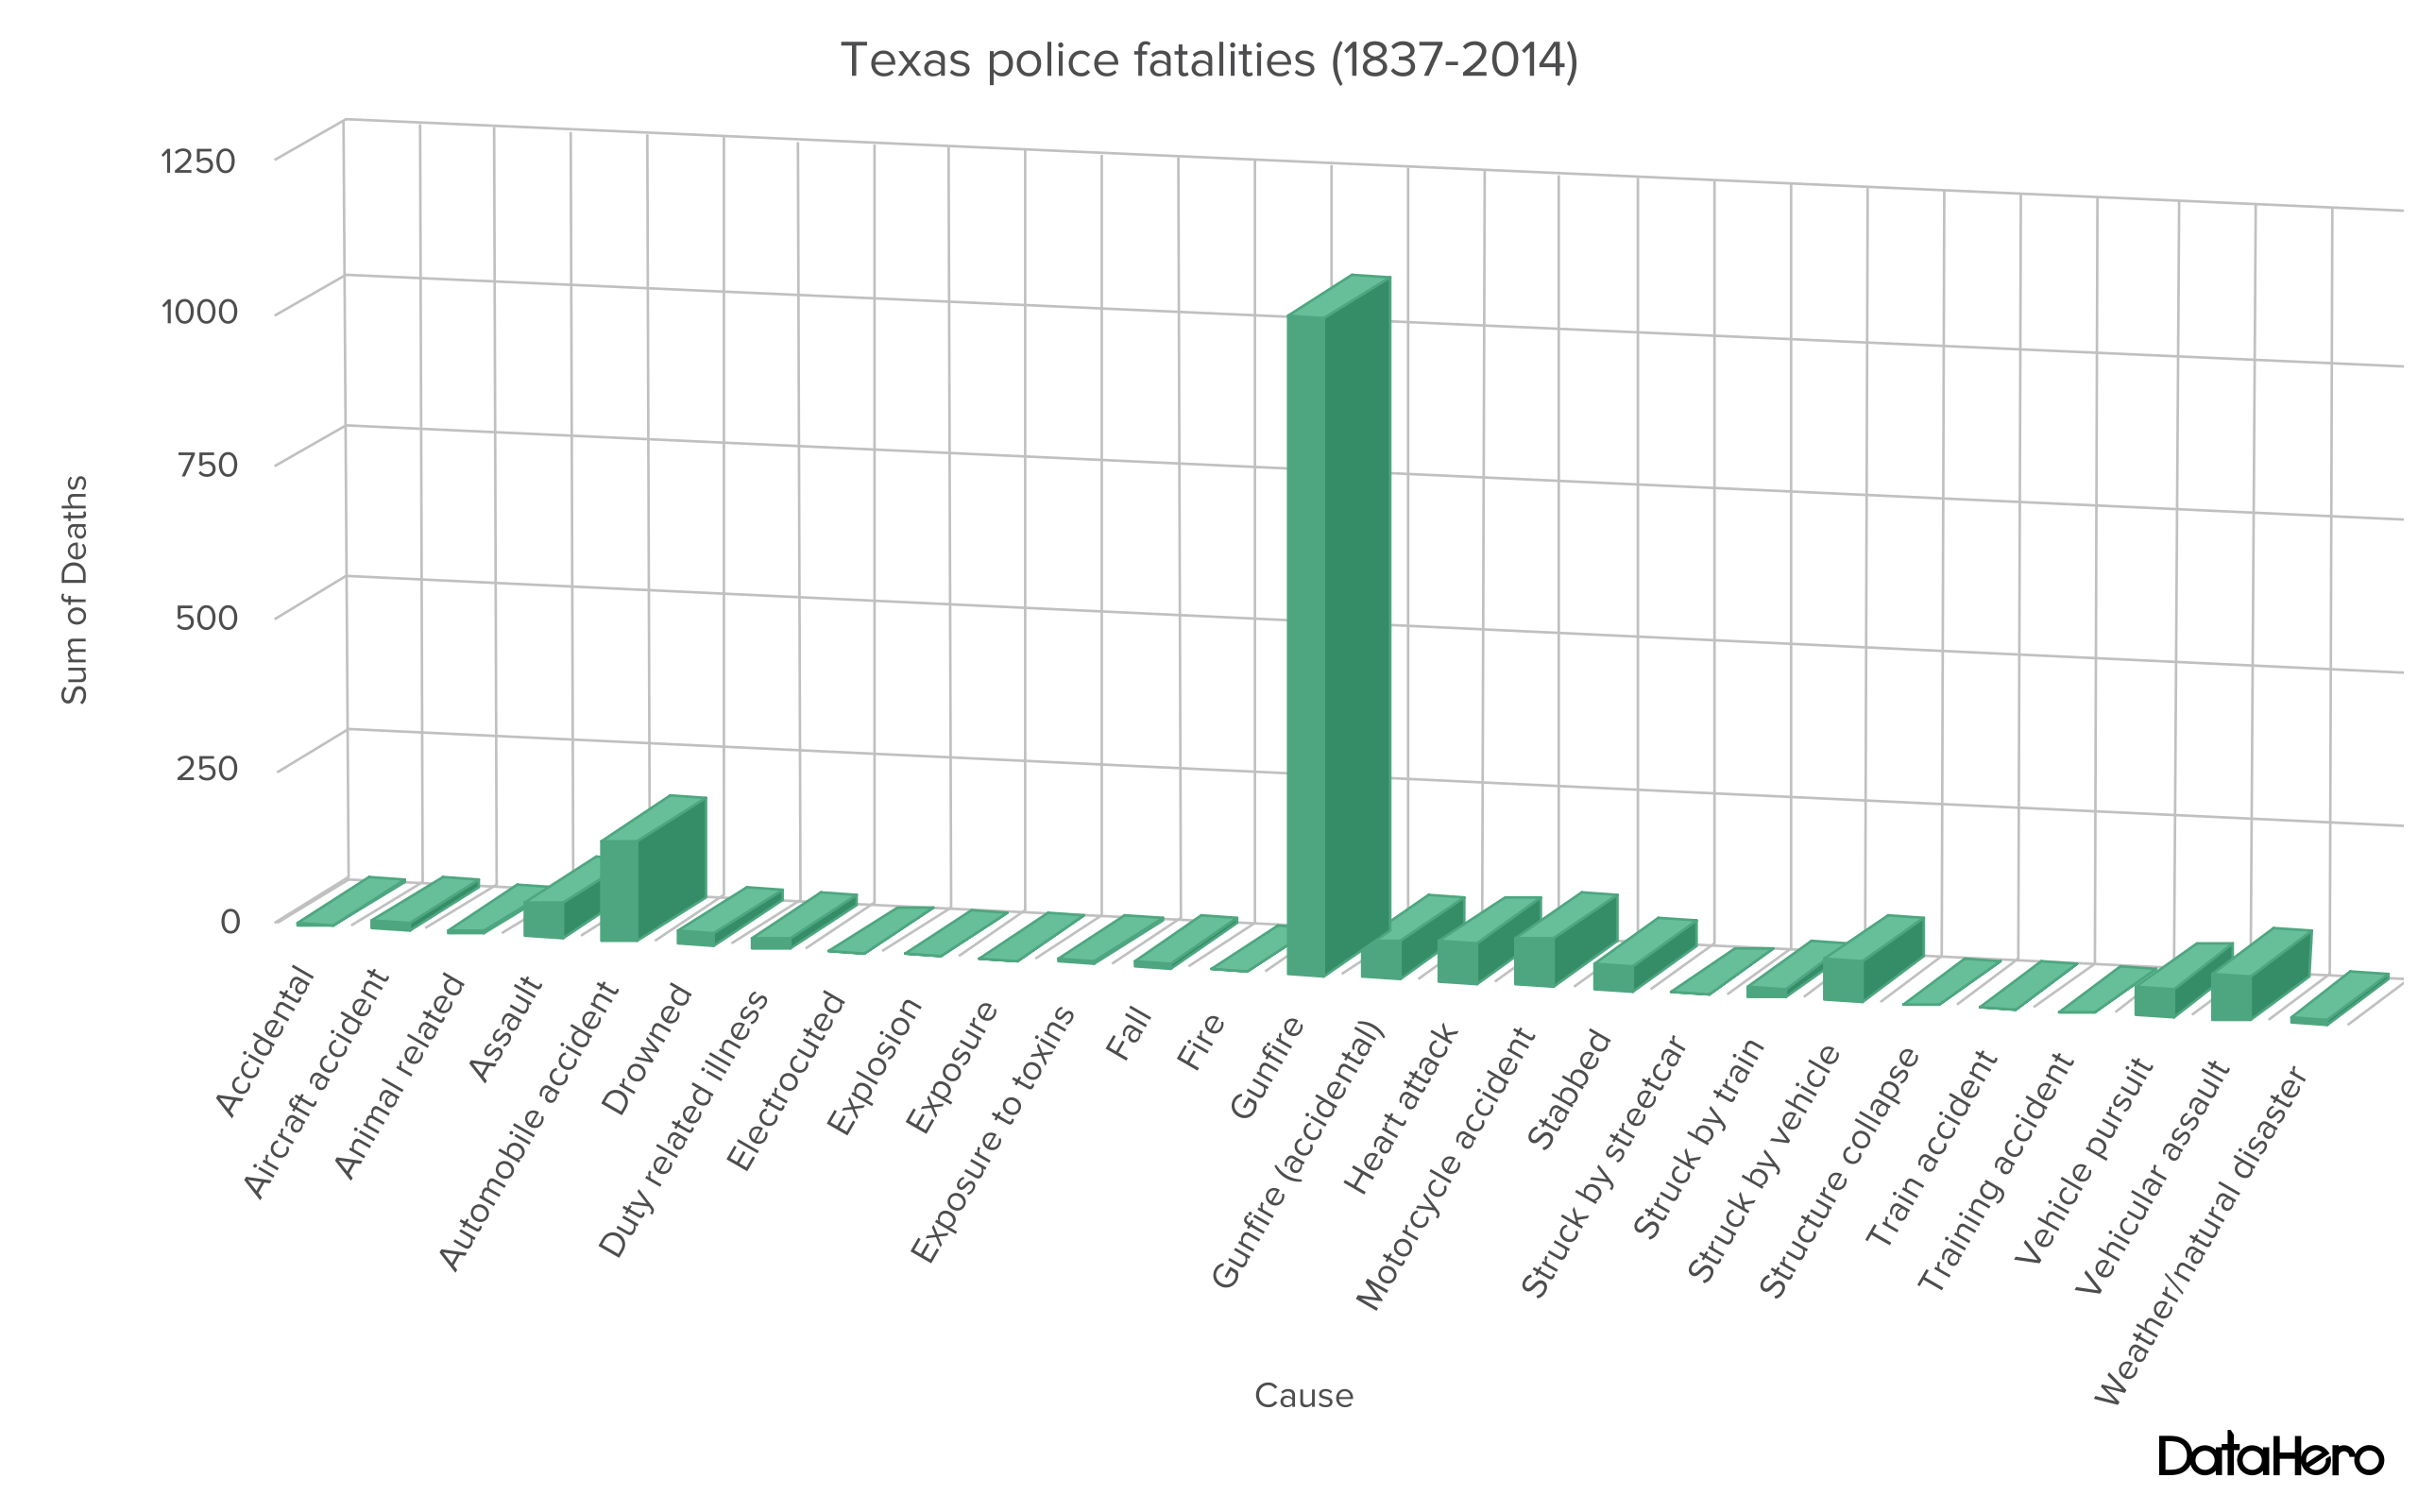 Houston Police Org Chart